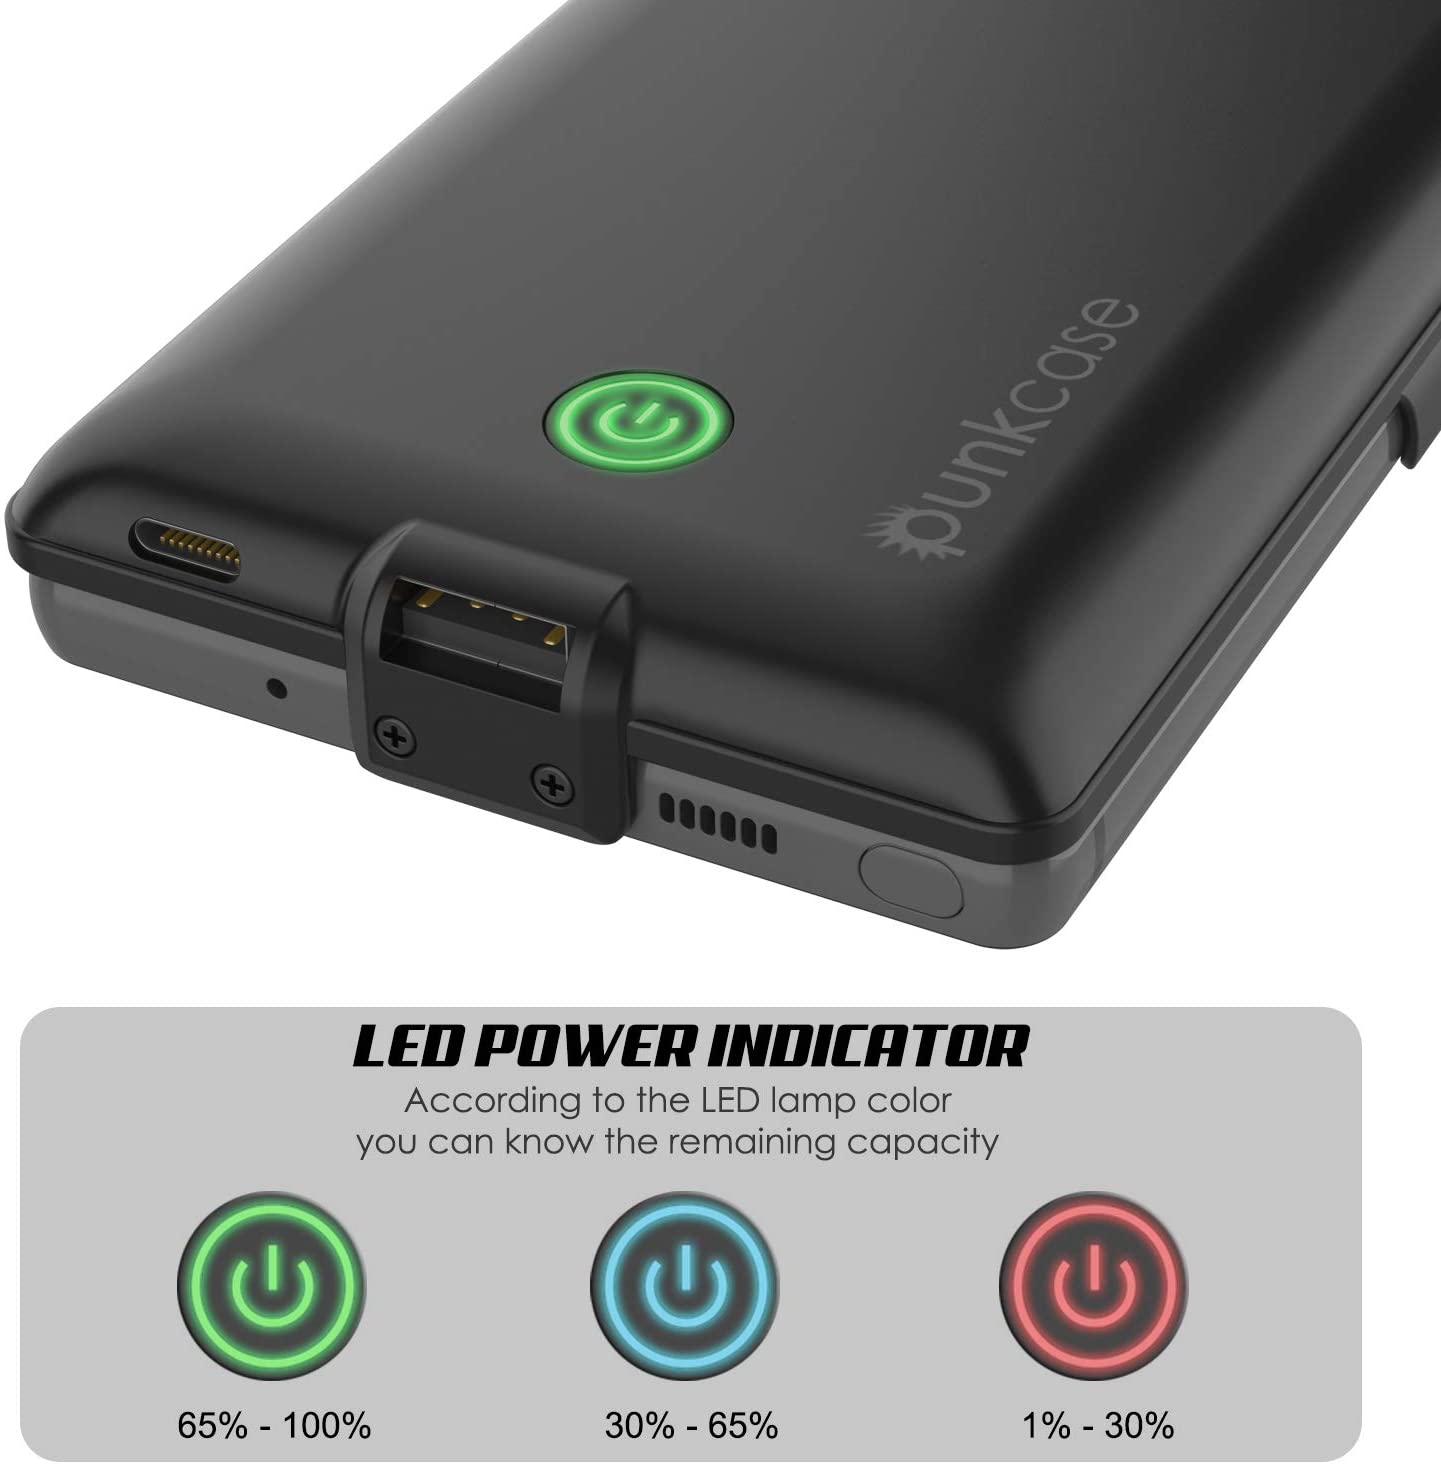 Galaxy Note 20 6000mAH Battery Charger PunkJuice 2.0 Slim Case [Black]